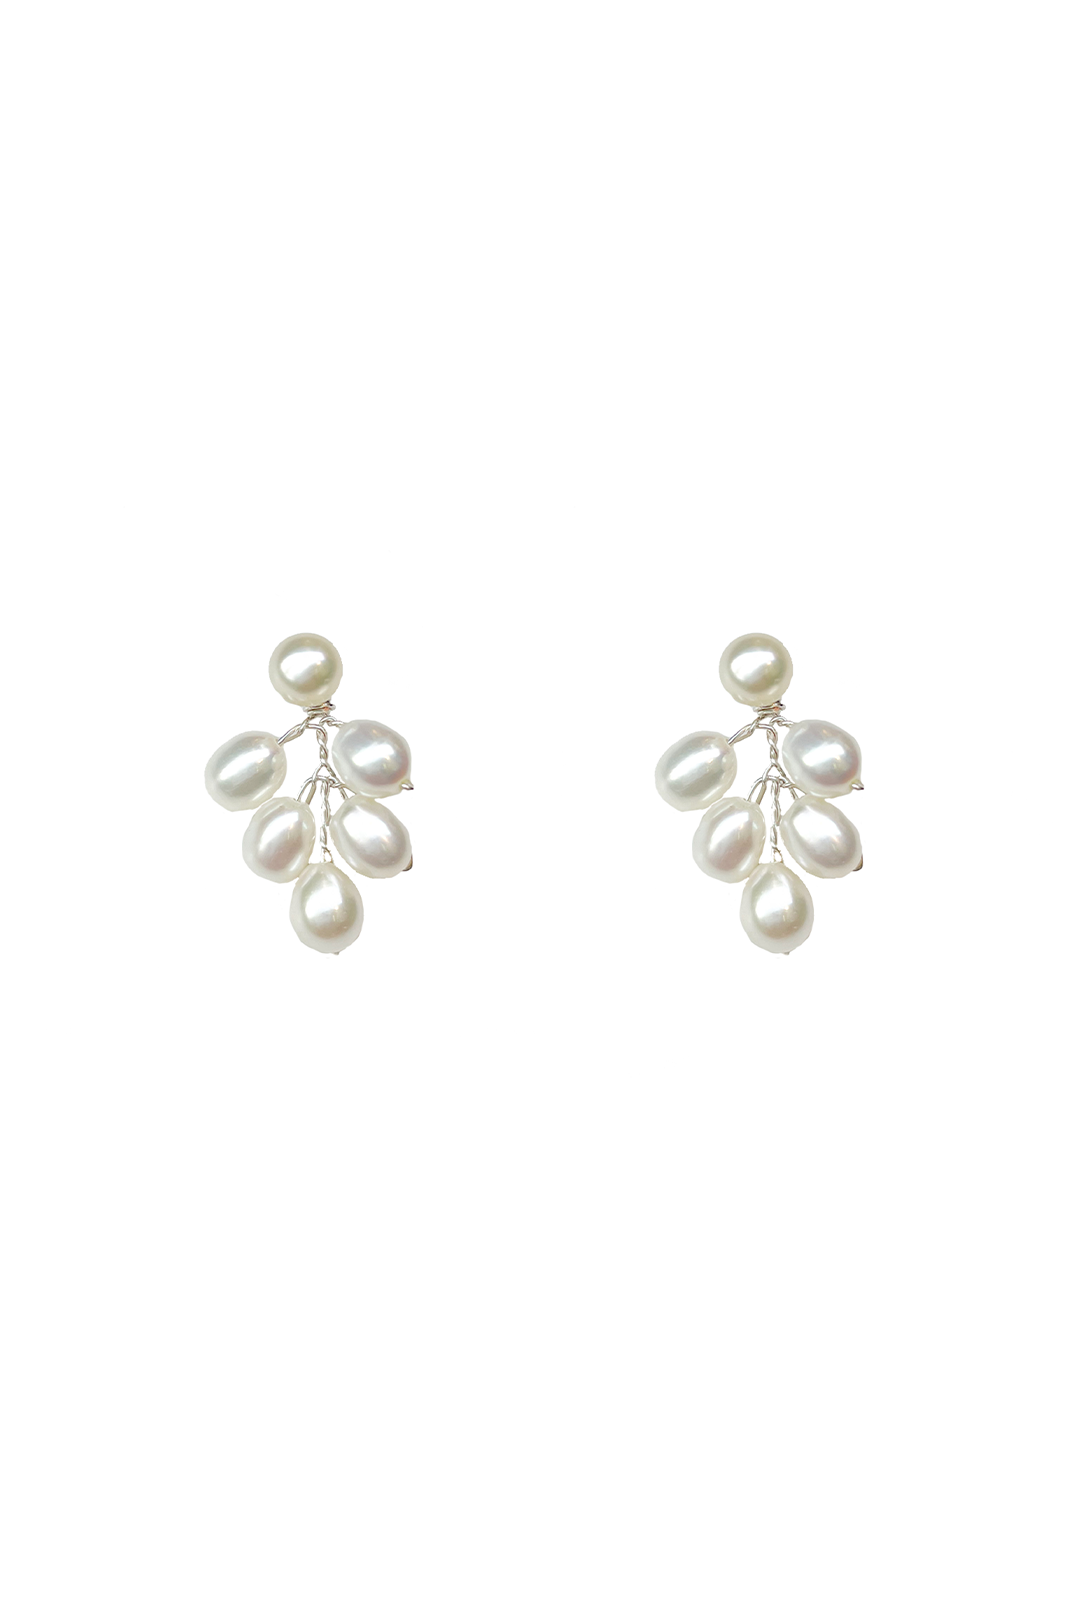 Kensington Grande Pearl Earrings - Gold